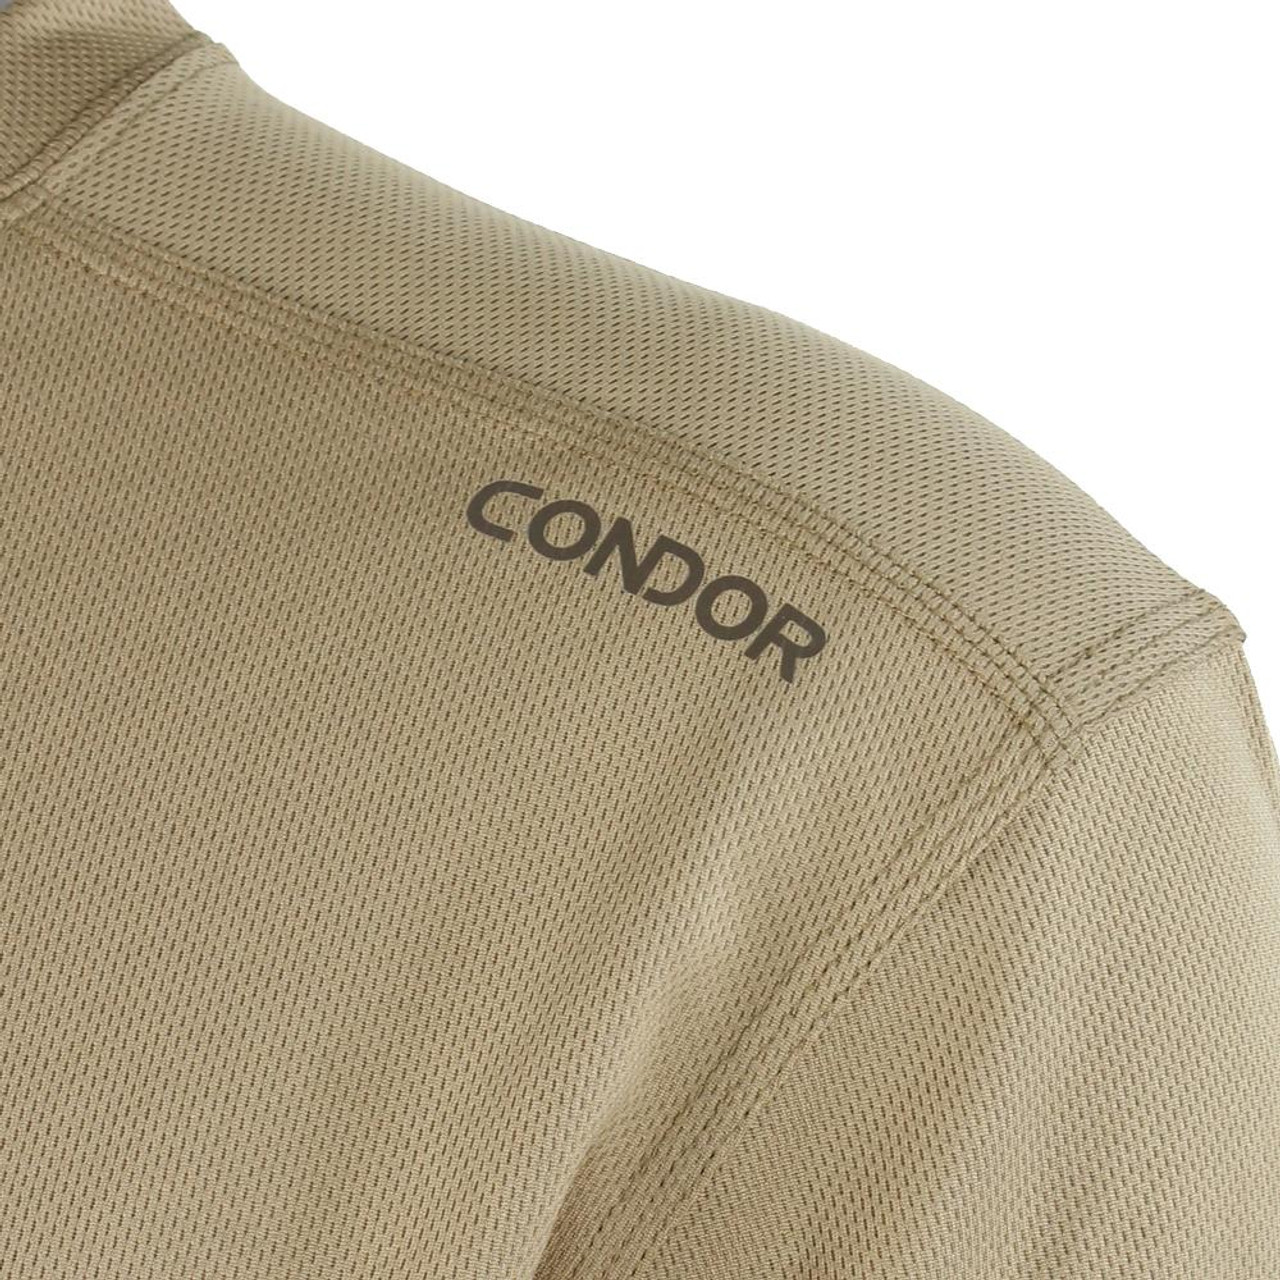 Condor Maxfort Short Sleeve Training Top